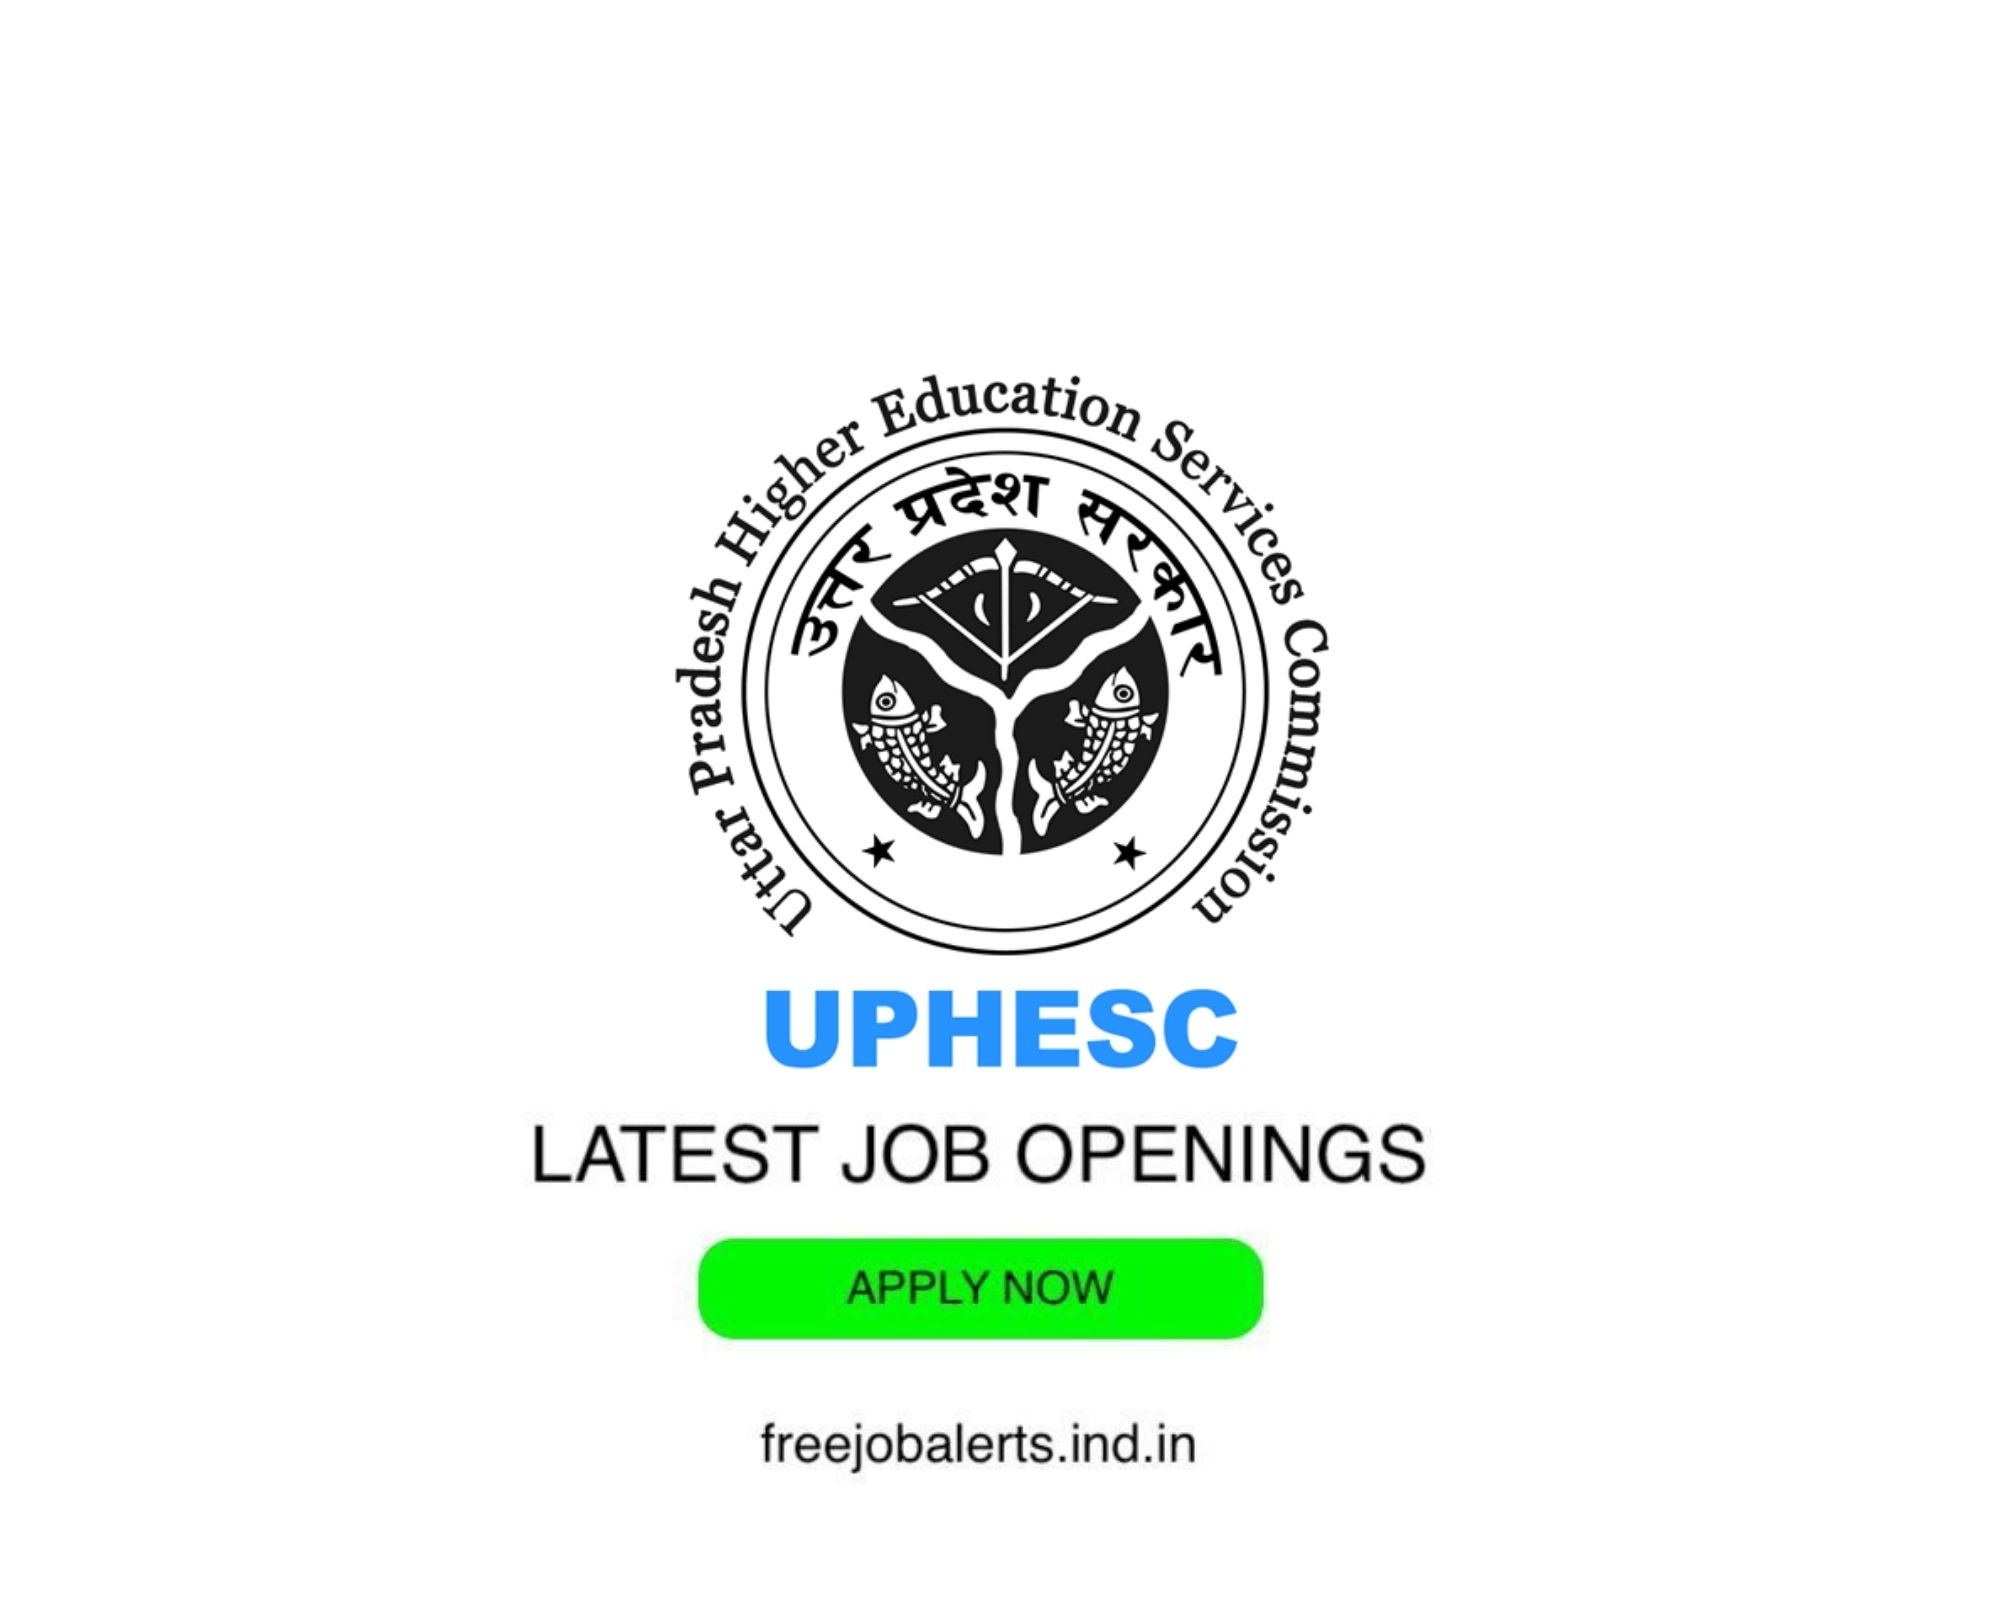 UPHESC - Uttar Pradesh Higher Education Services Commission- Latest Govt job openings - Free job alerts, Indian Govt Jobs